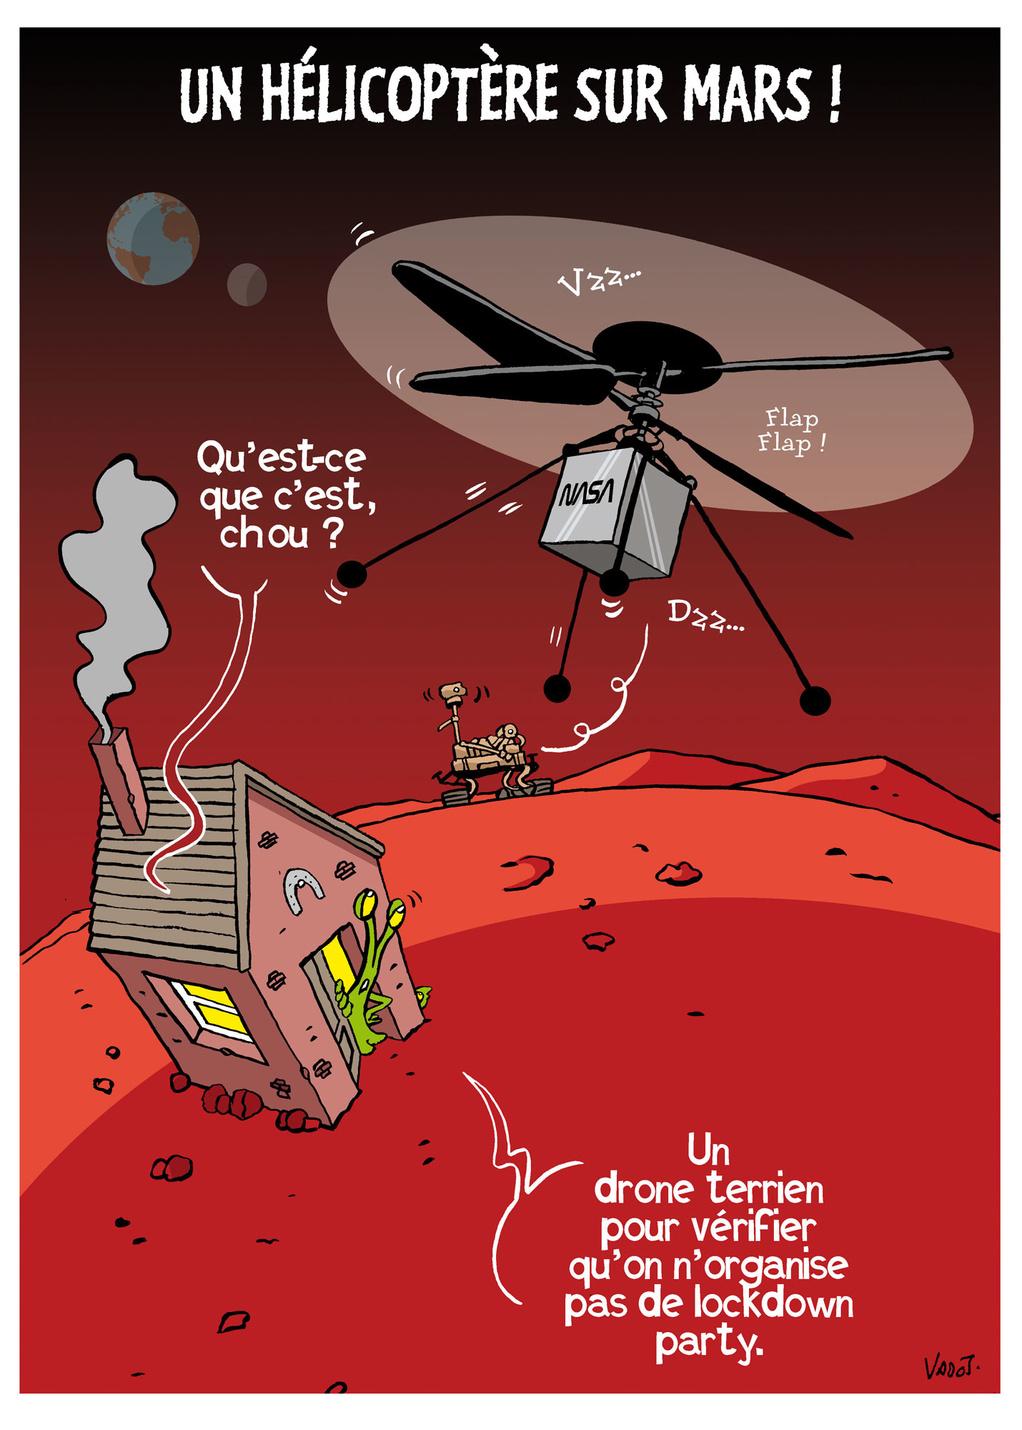 Un petit hélicoptère embarqué à bord d'un robot de la NASA survole la surface de Mars.